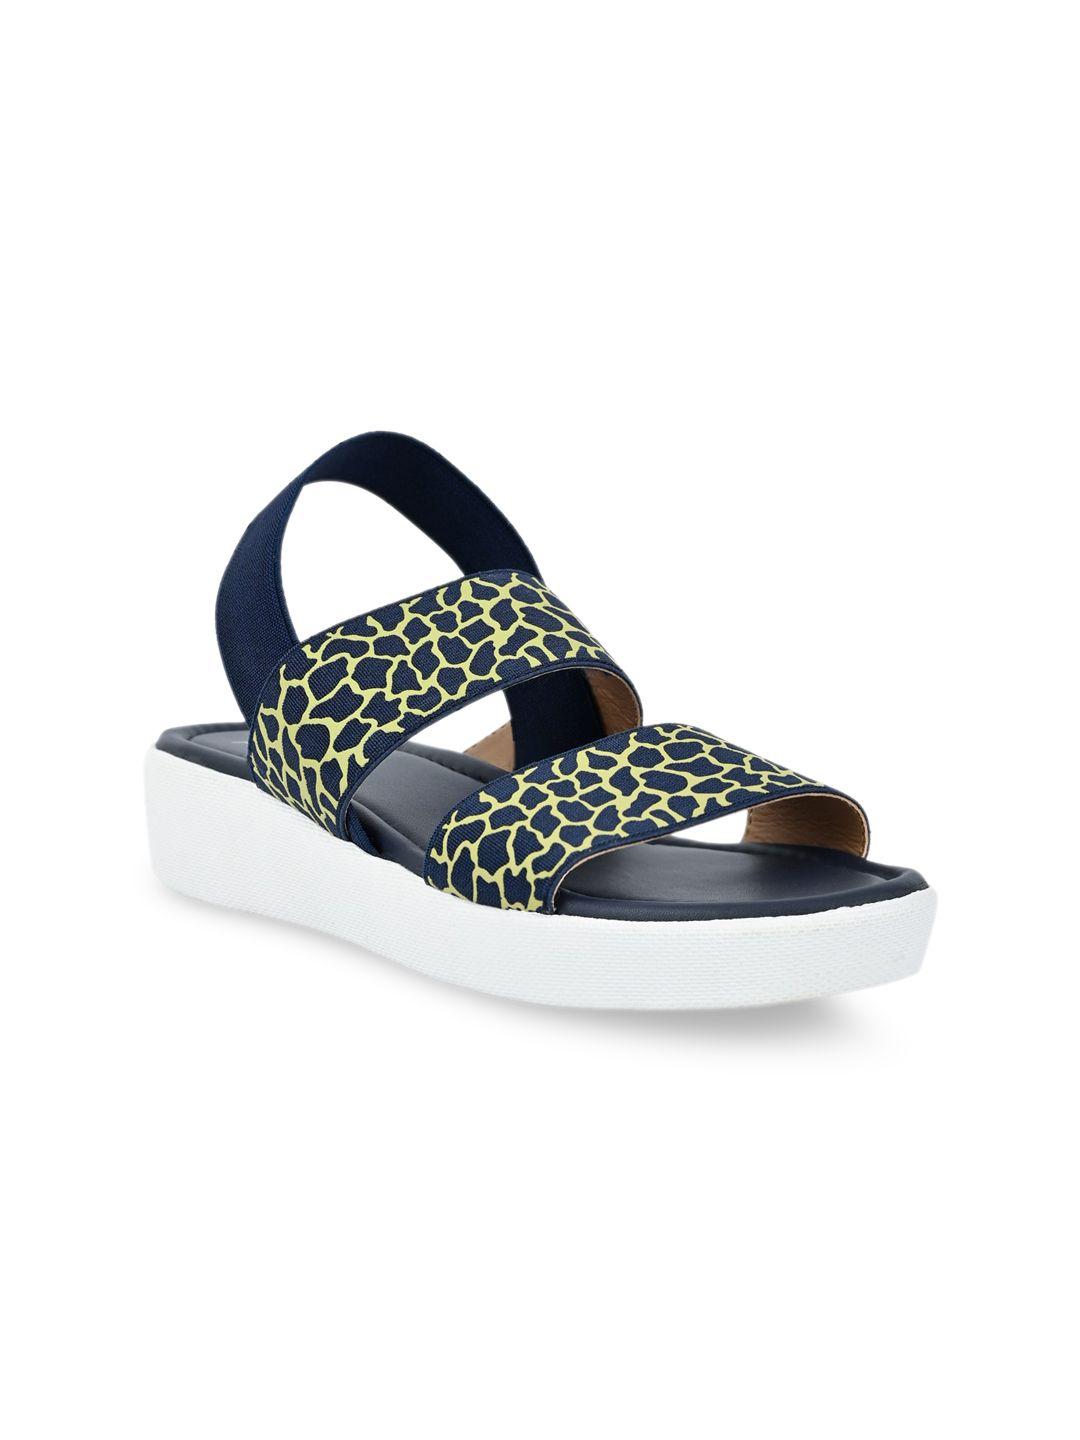 jove navy blue printed platform sandals